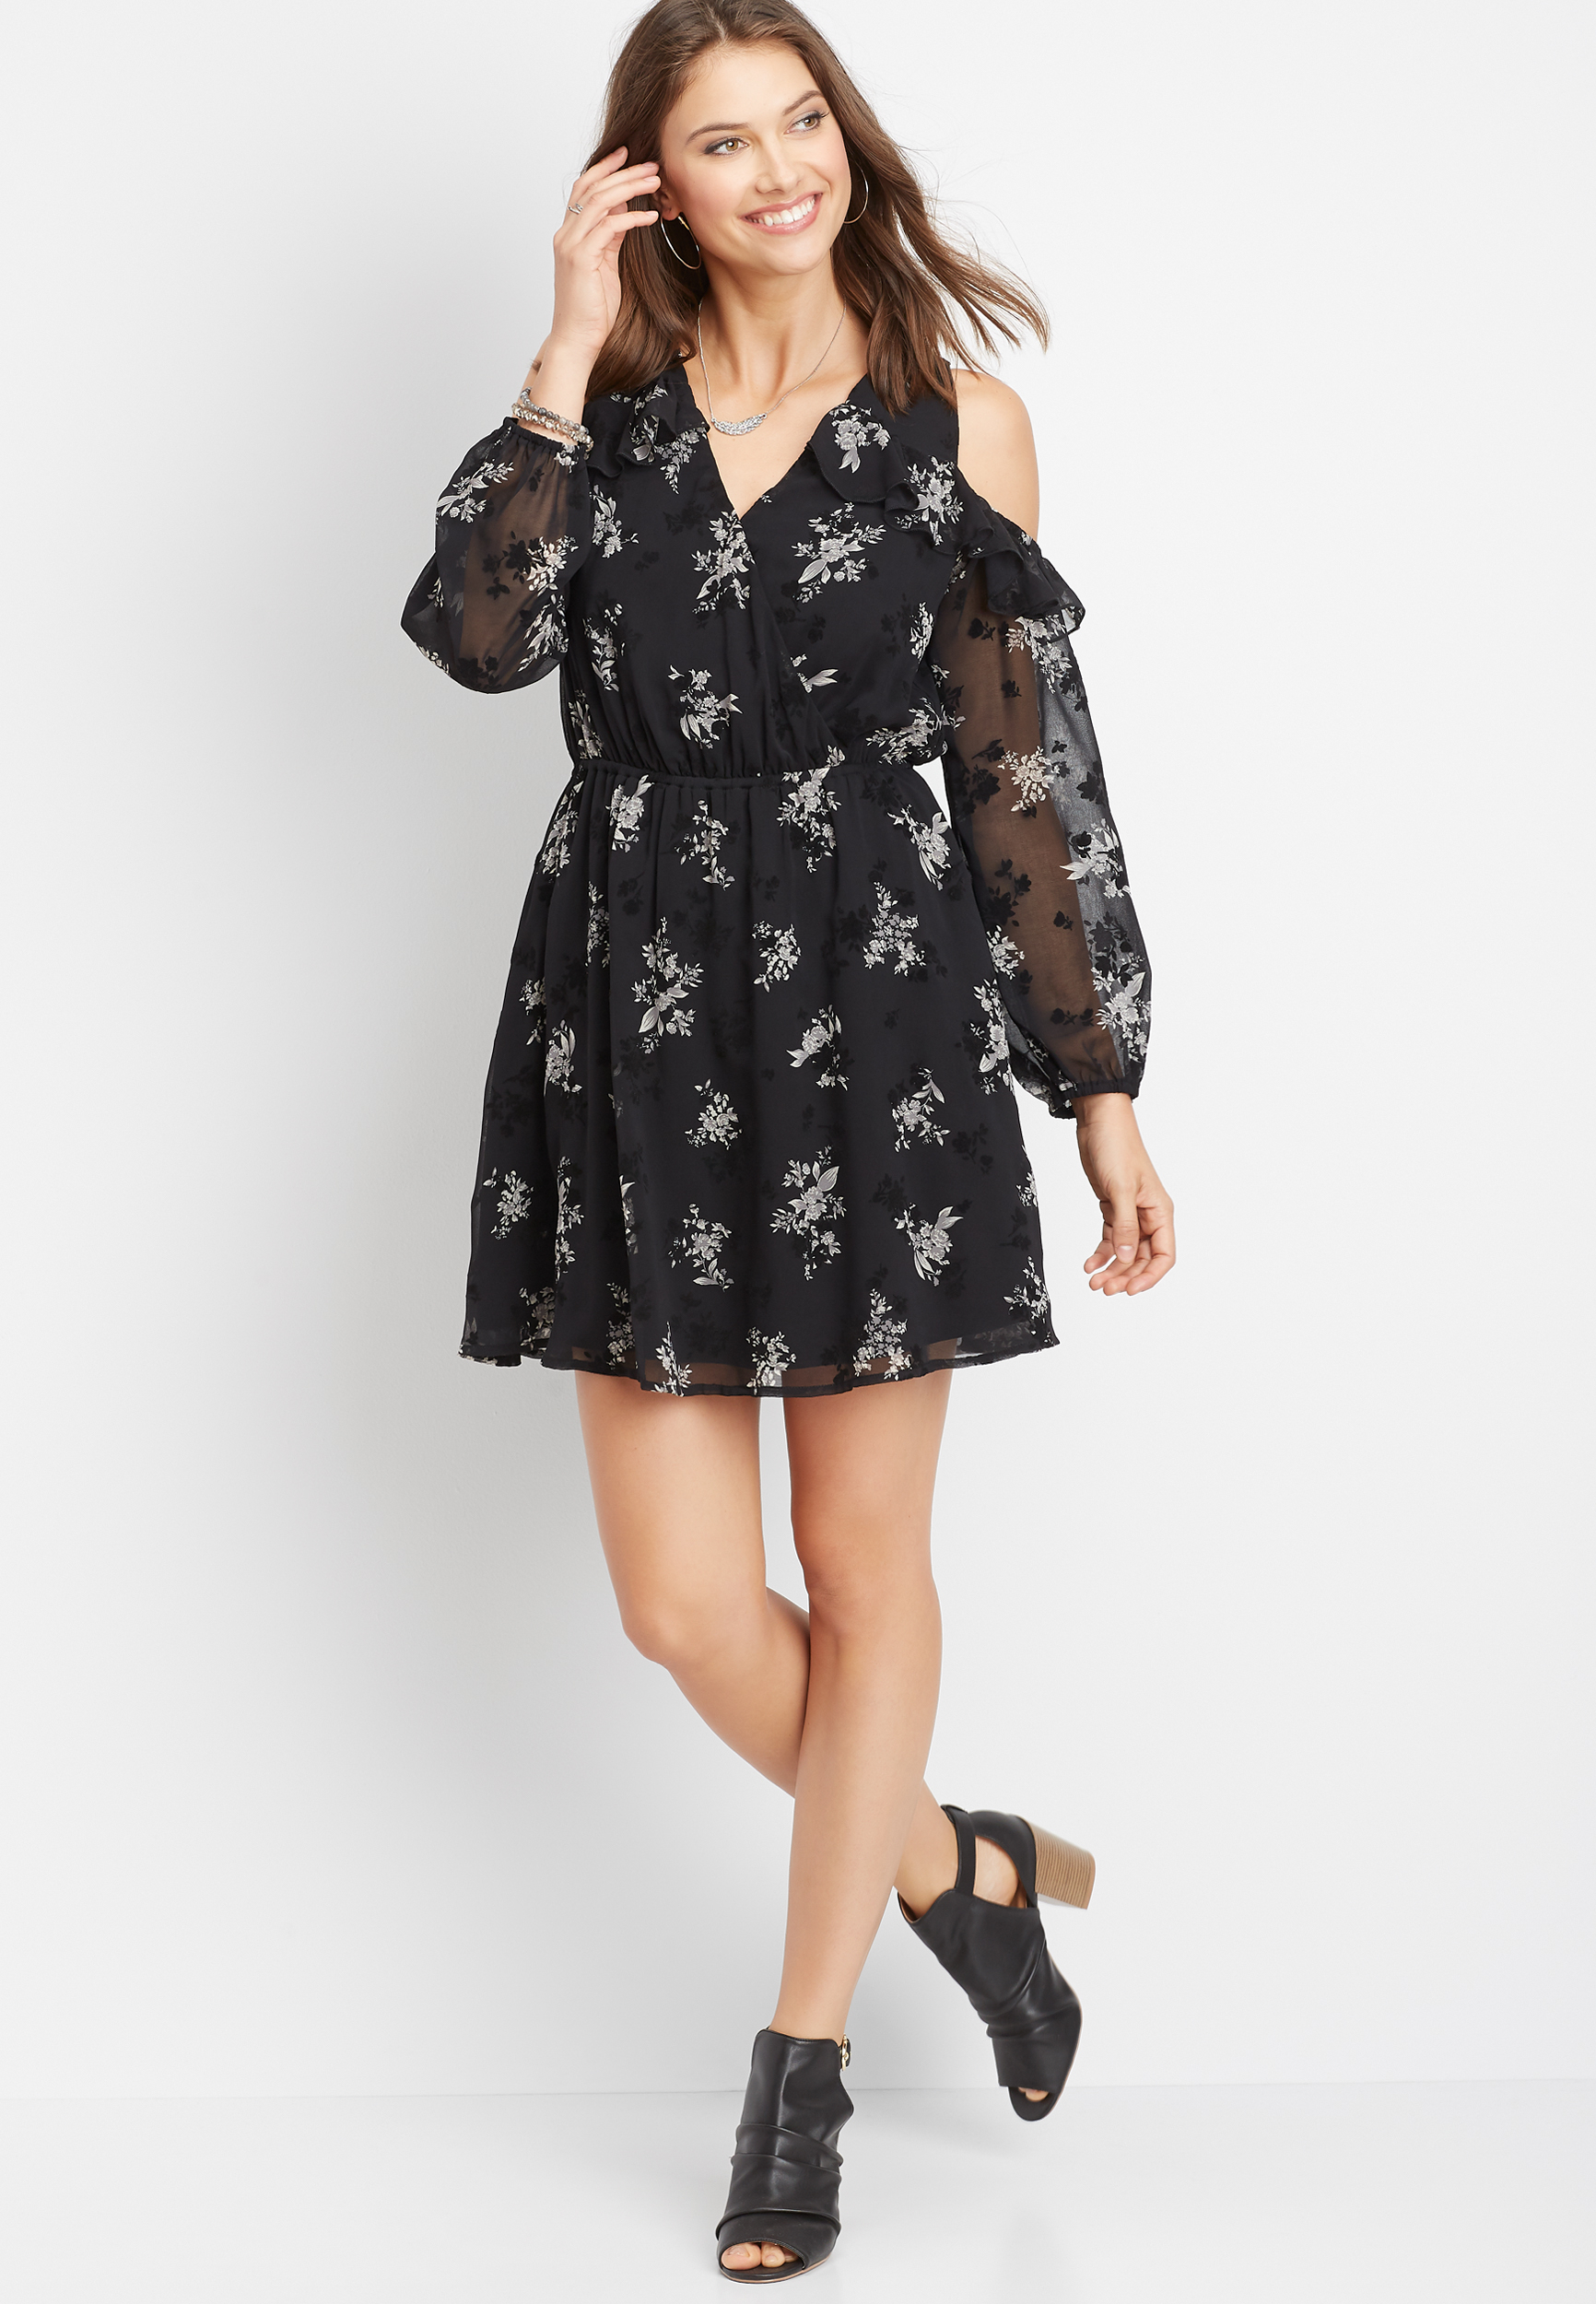 maurices black floral dress